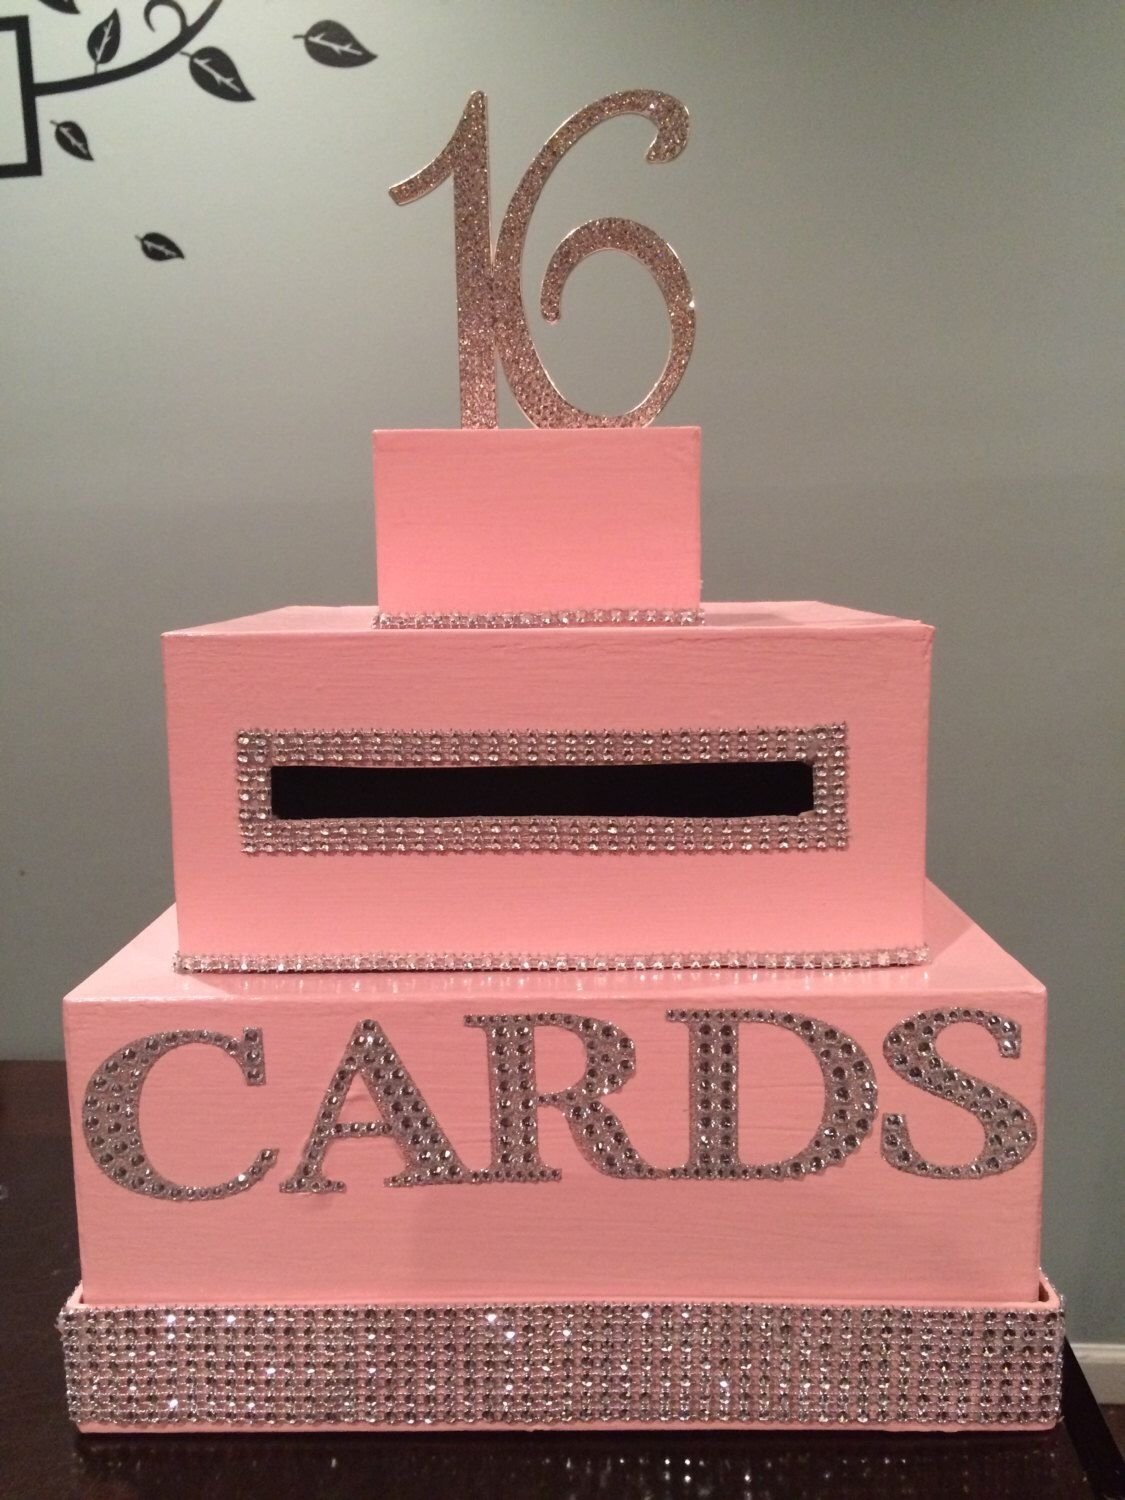 10 Famous Sweet 16 Gift Ideas For Daughter light pink sweet 16 card boxlongislandkreations on etsy https 1 2022